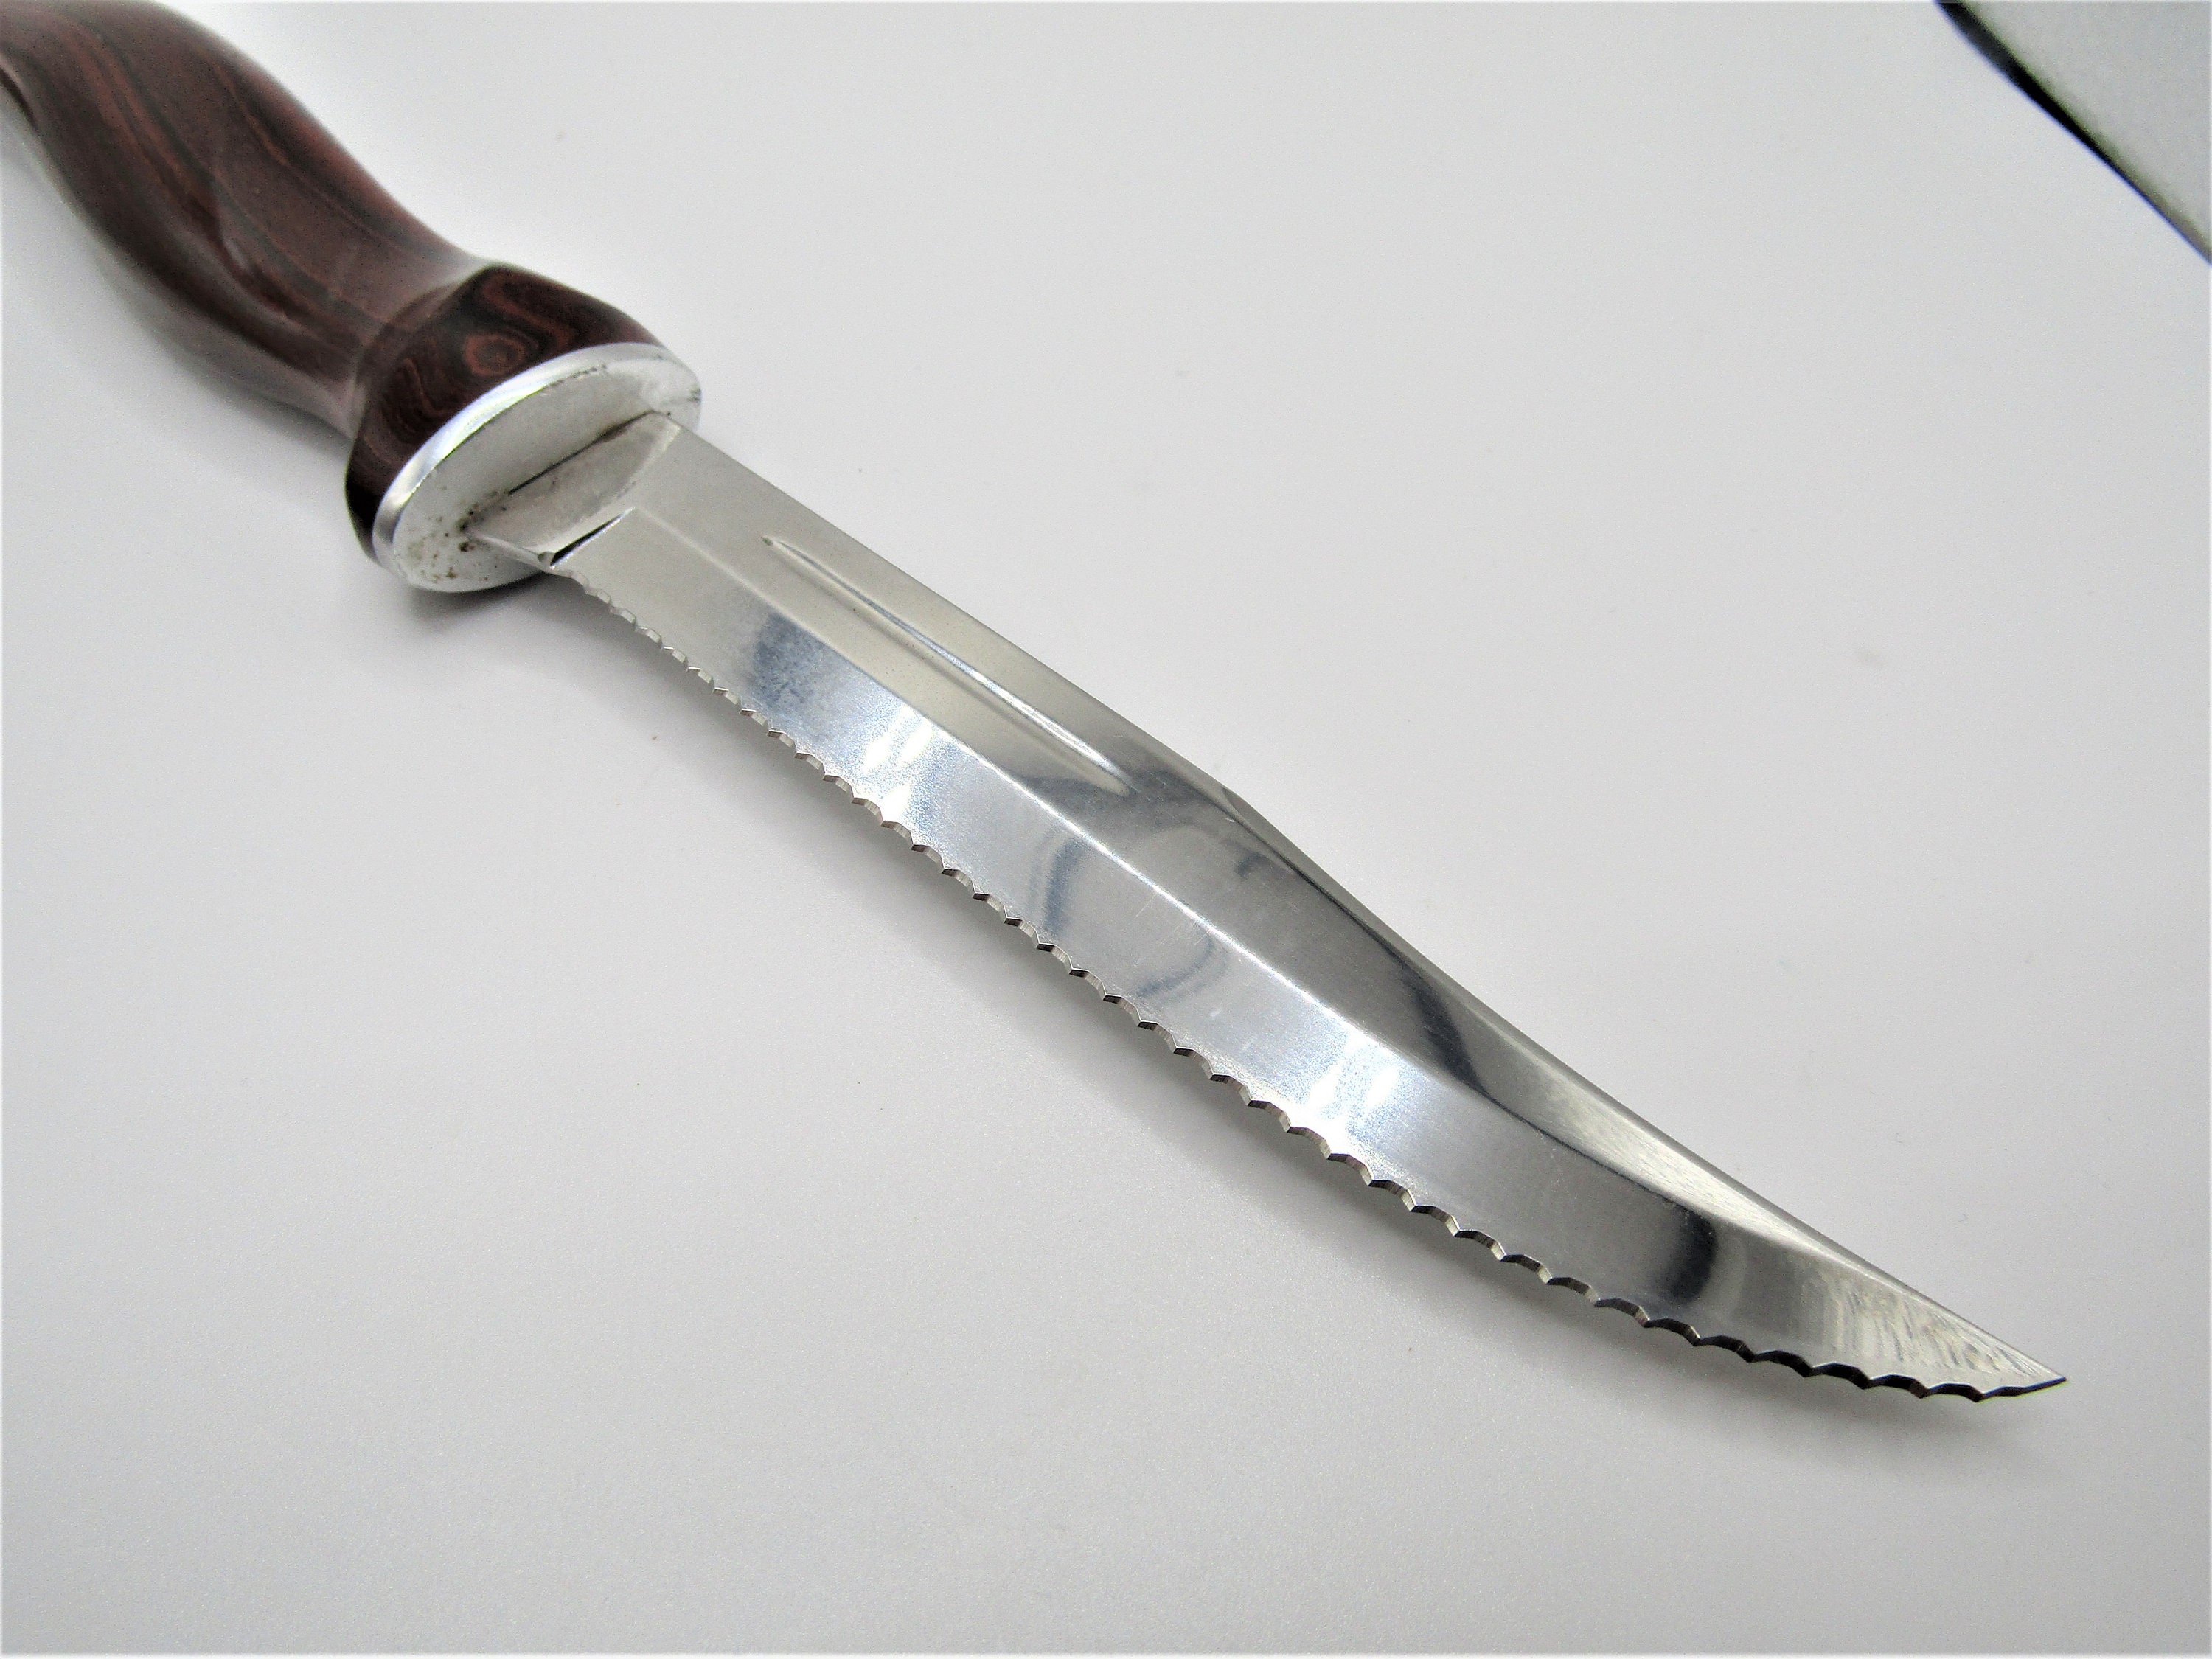  Cutco Model 1769 Hunting Knife with Leather Sheath